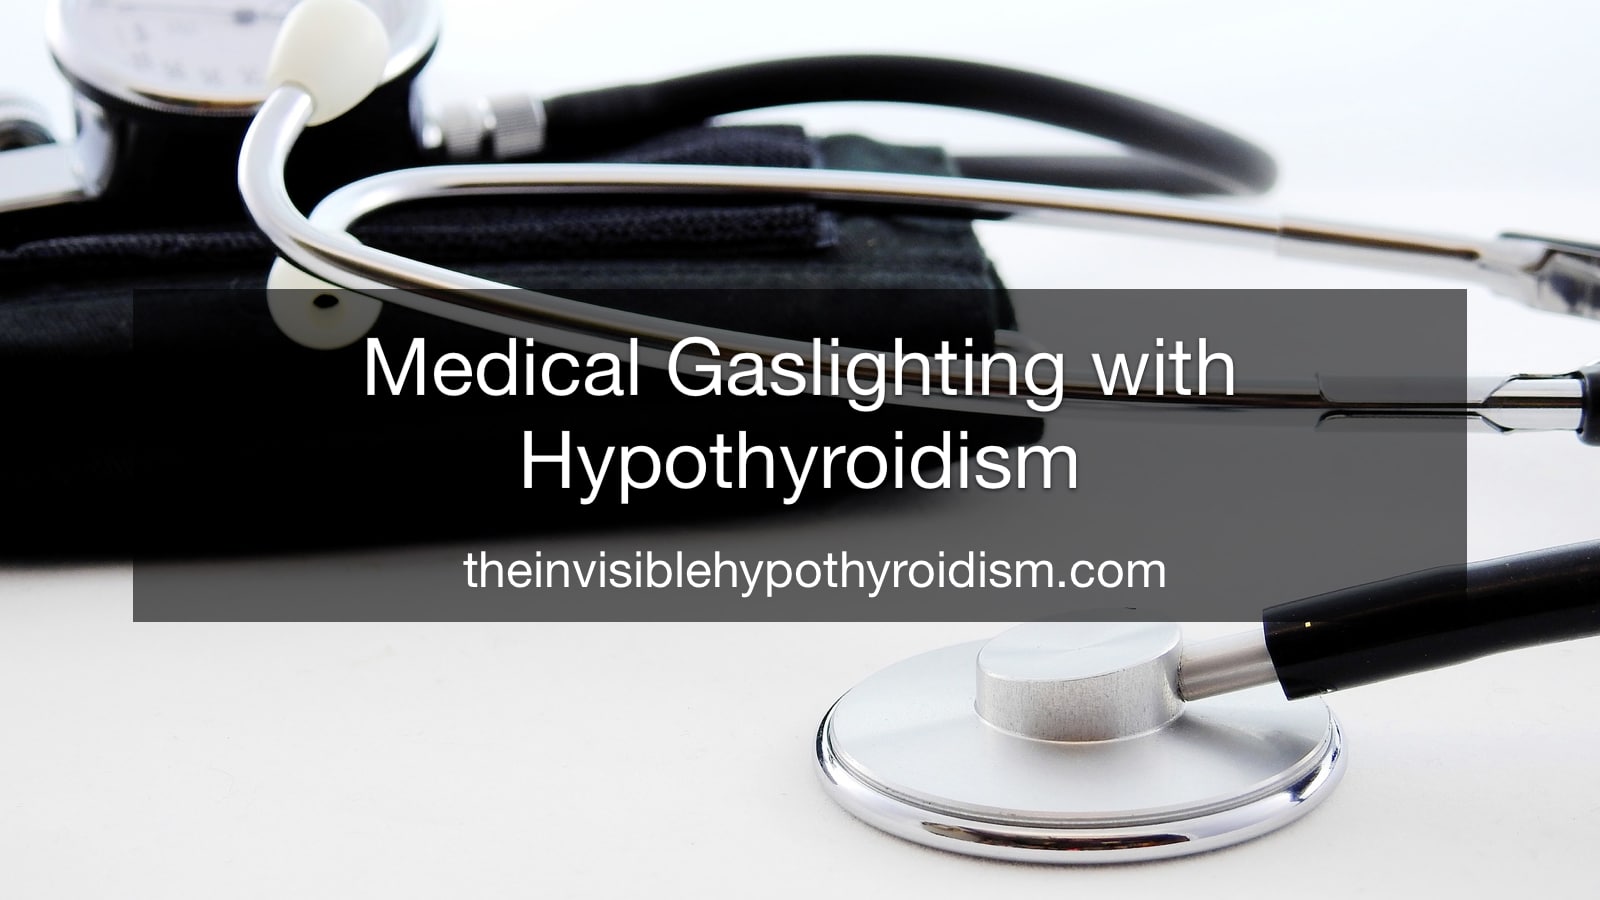 Medical Gaslighting with Hypothyroidism